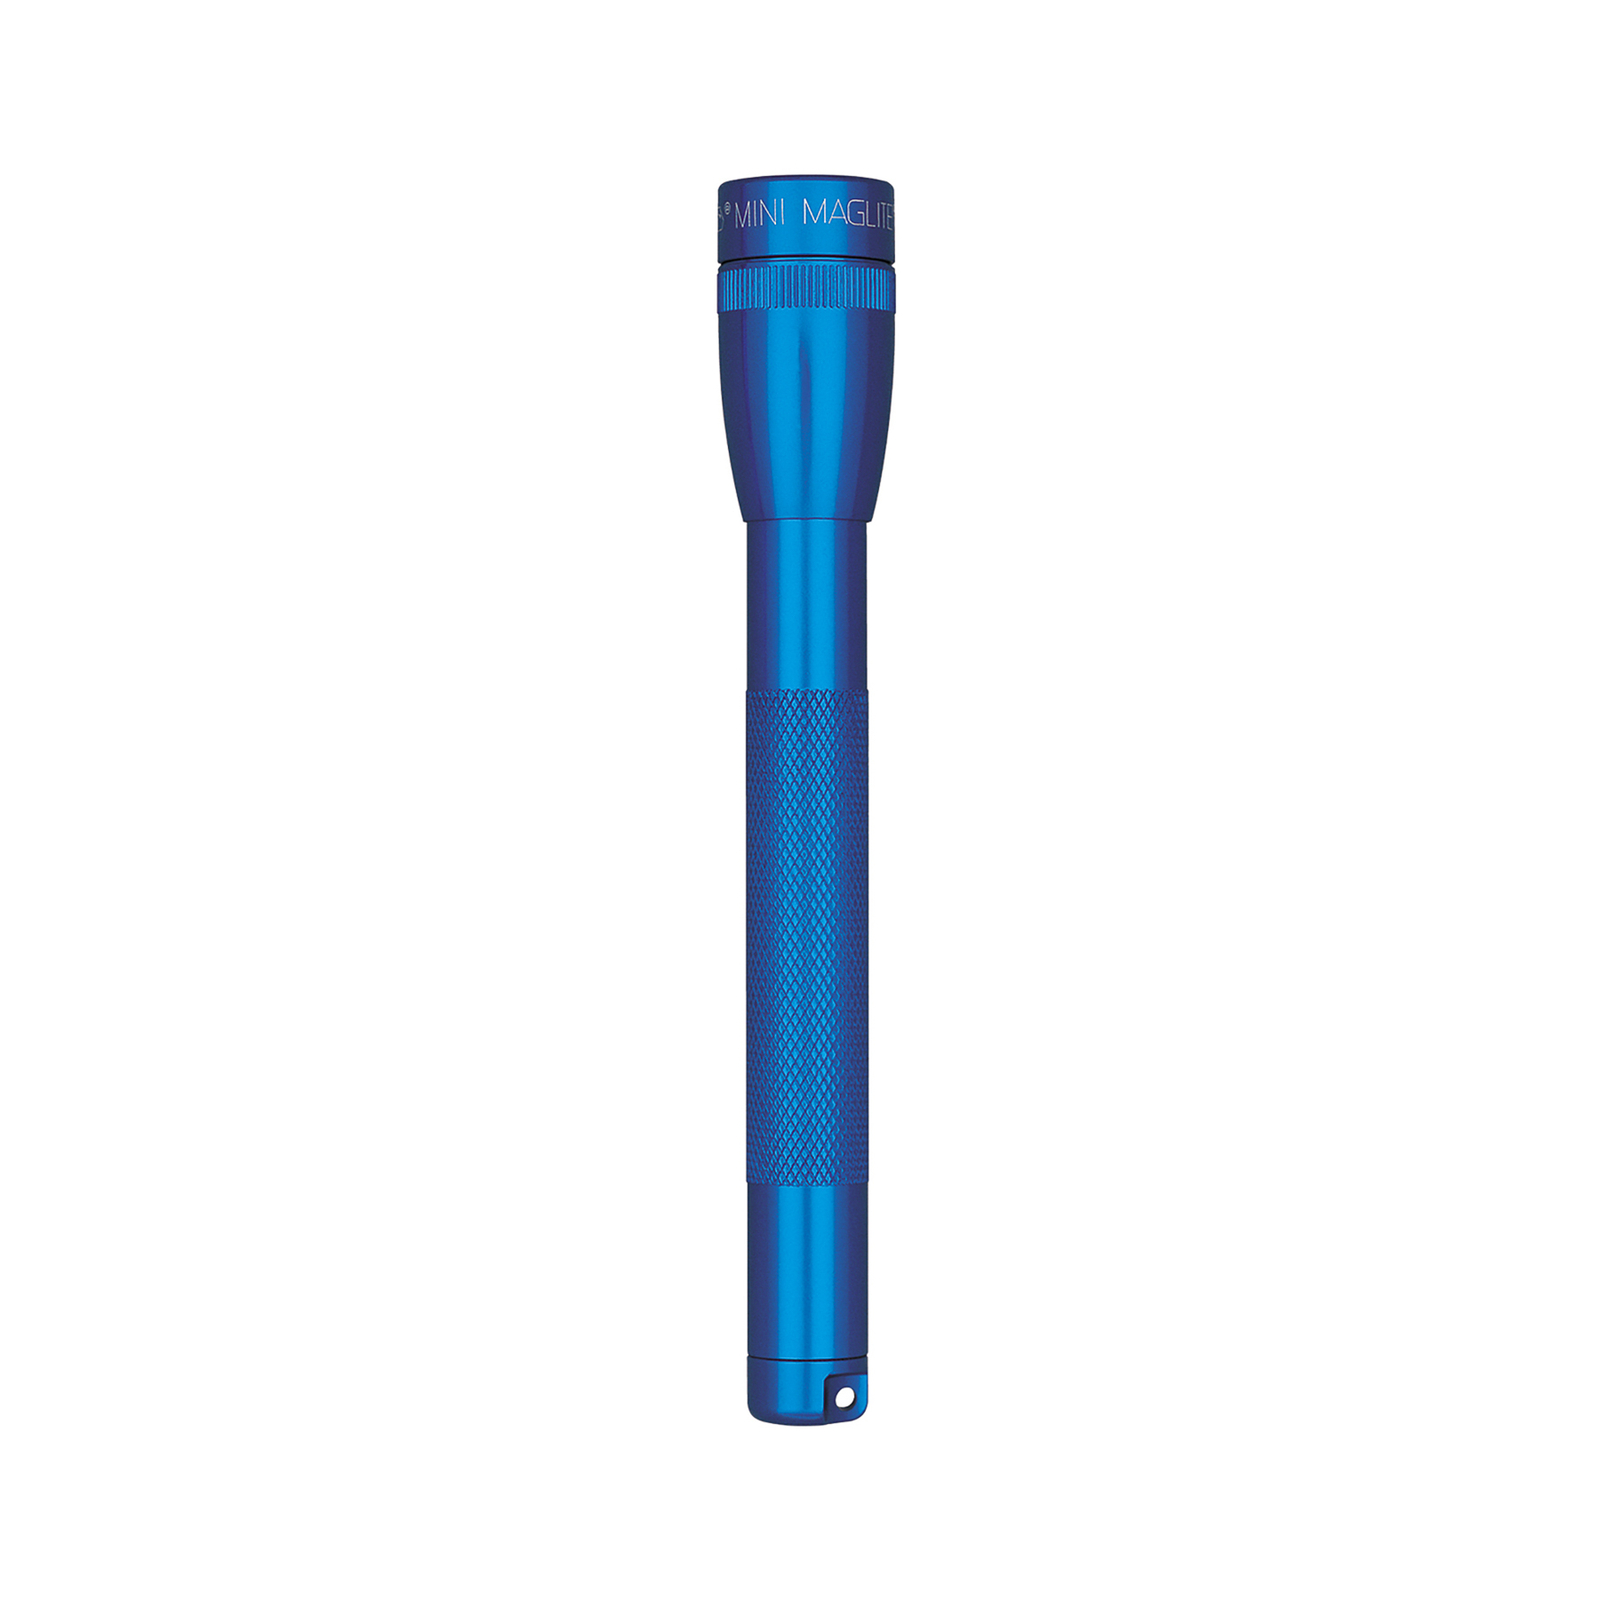 Maglite Xenon torch Mini, 2-Cell AAA, blue